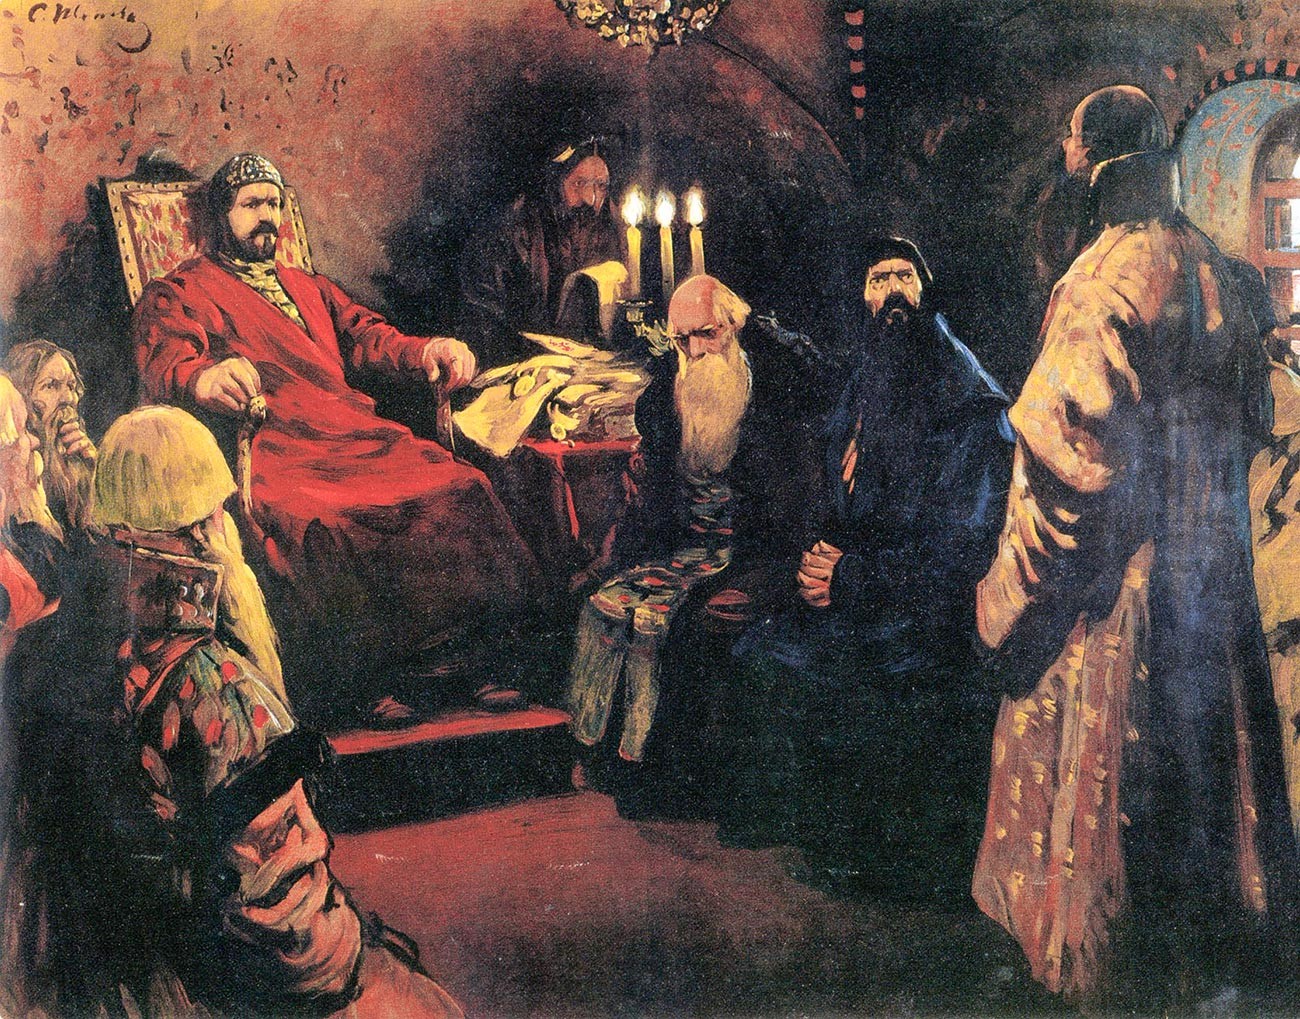 In 1566, Viskovatiy took part in the Zemsky Sobor (national assembly of the land).

